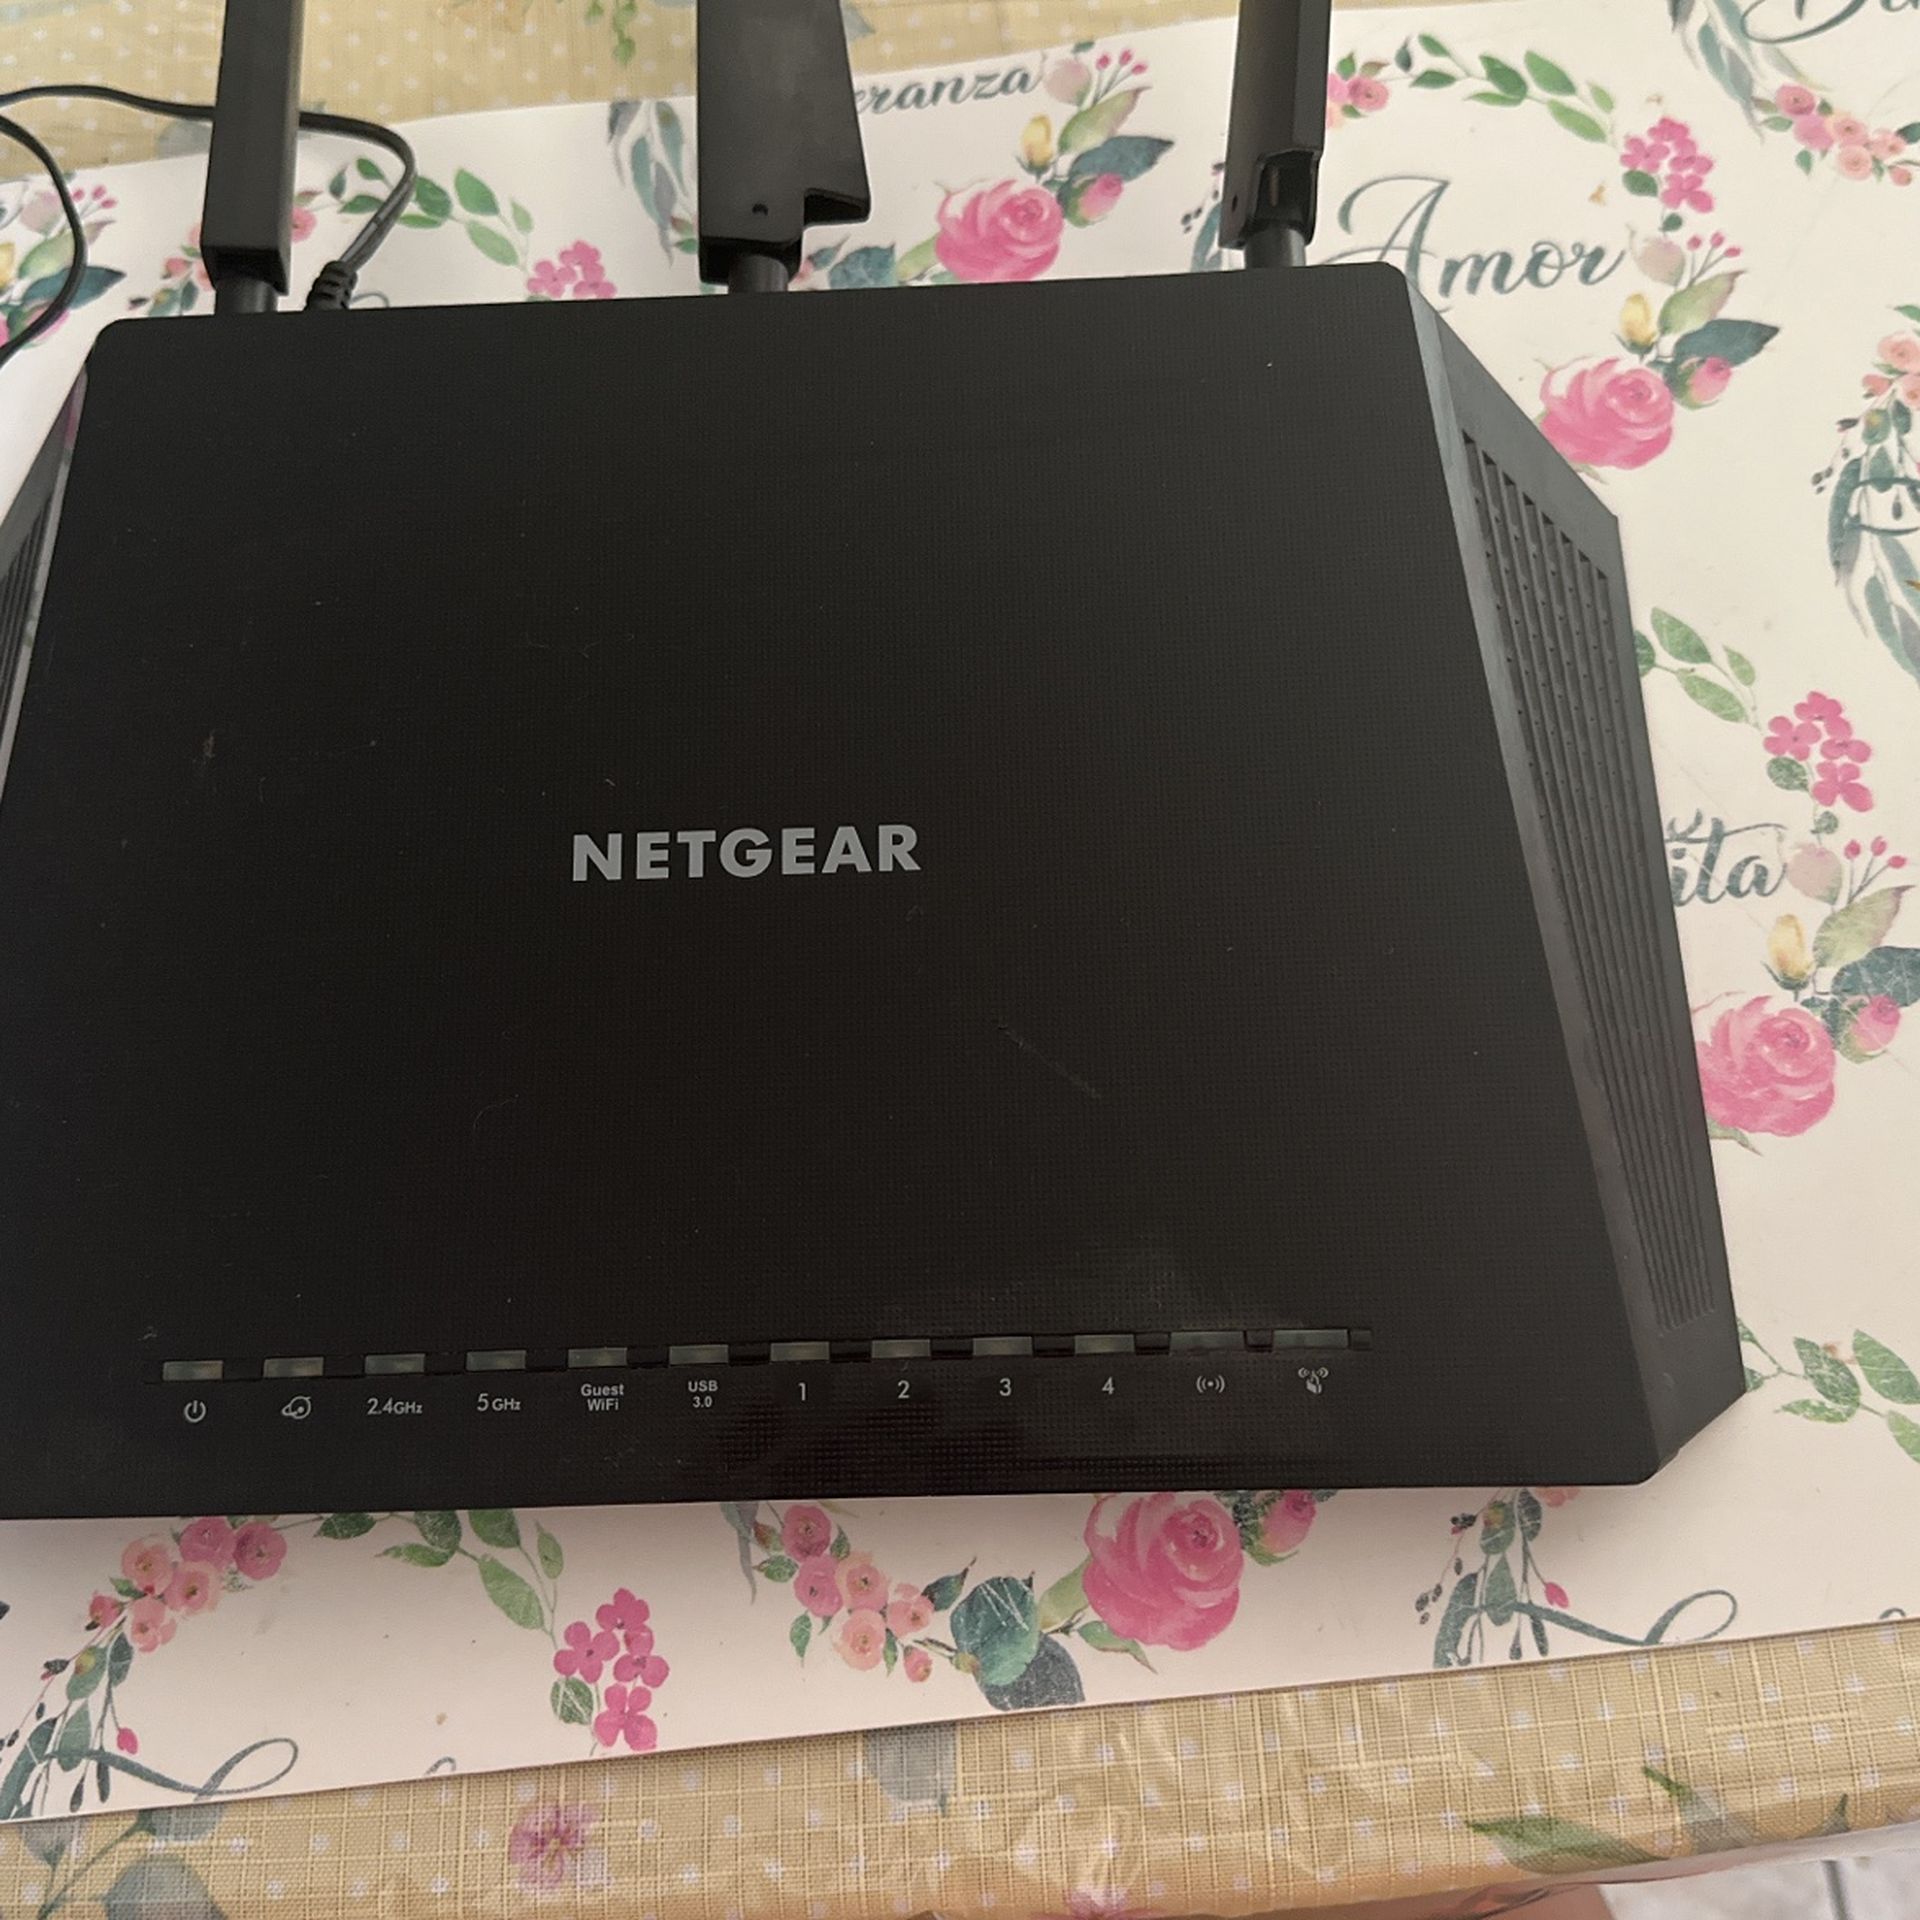 Netgear AC2100 Nighthawk Smart WiFi Router - Dual Band Gigabit